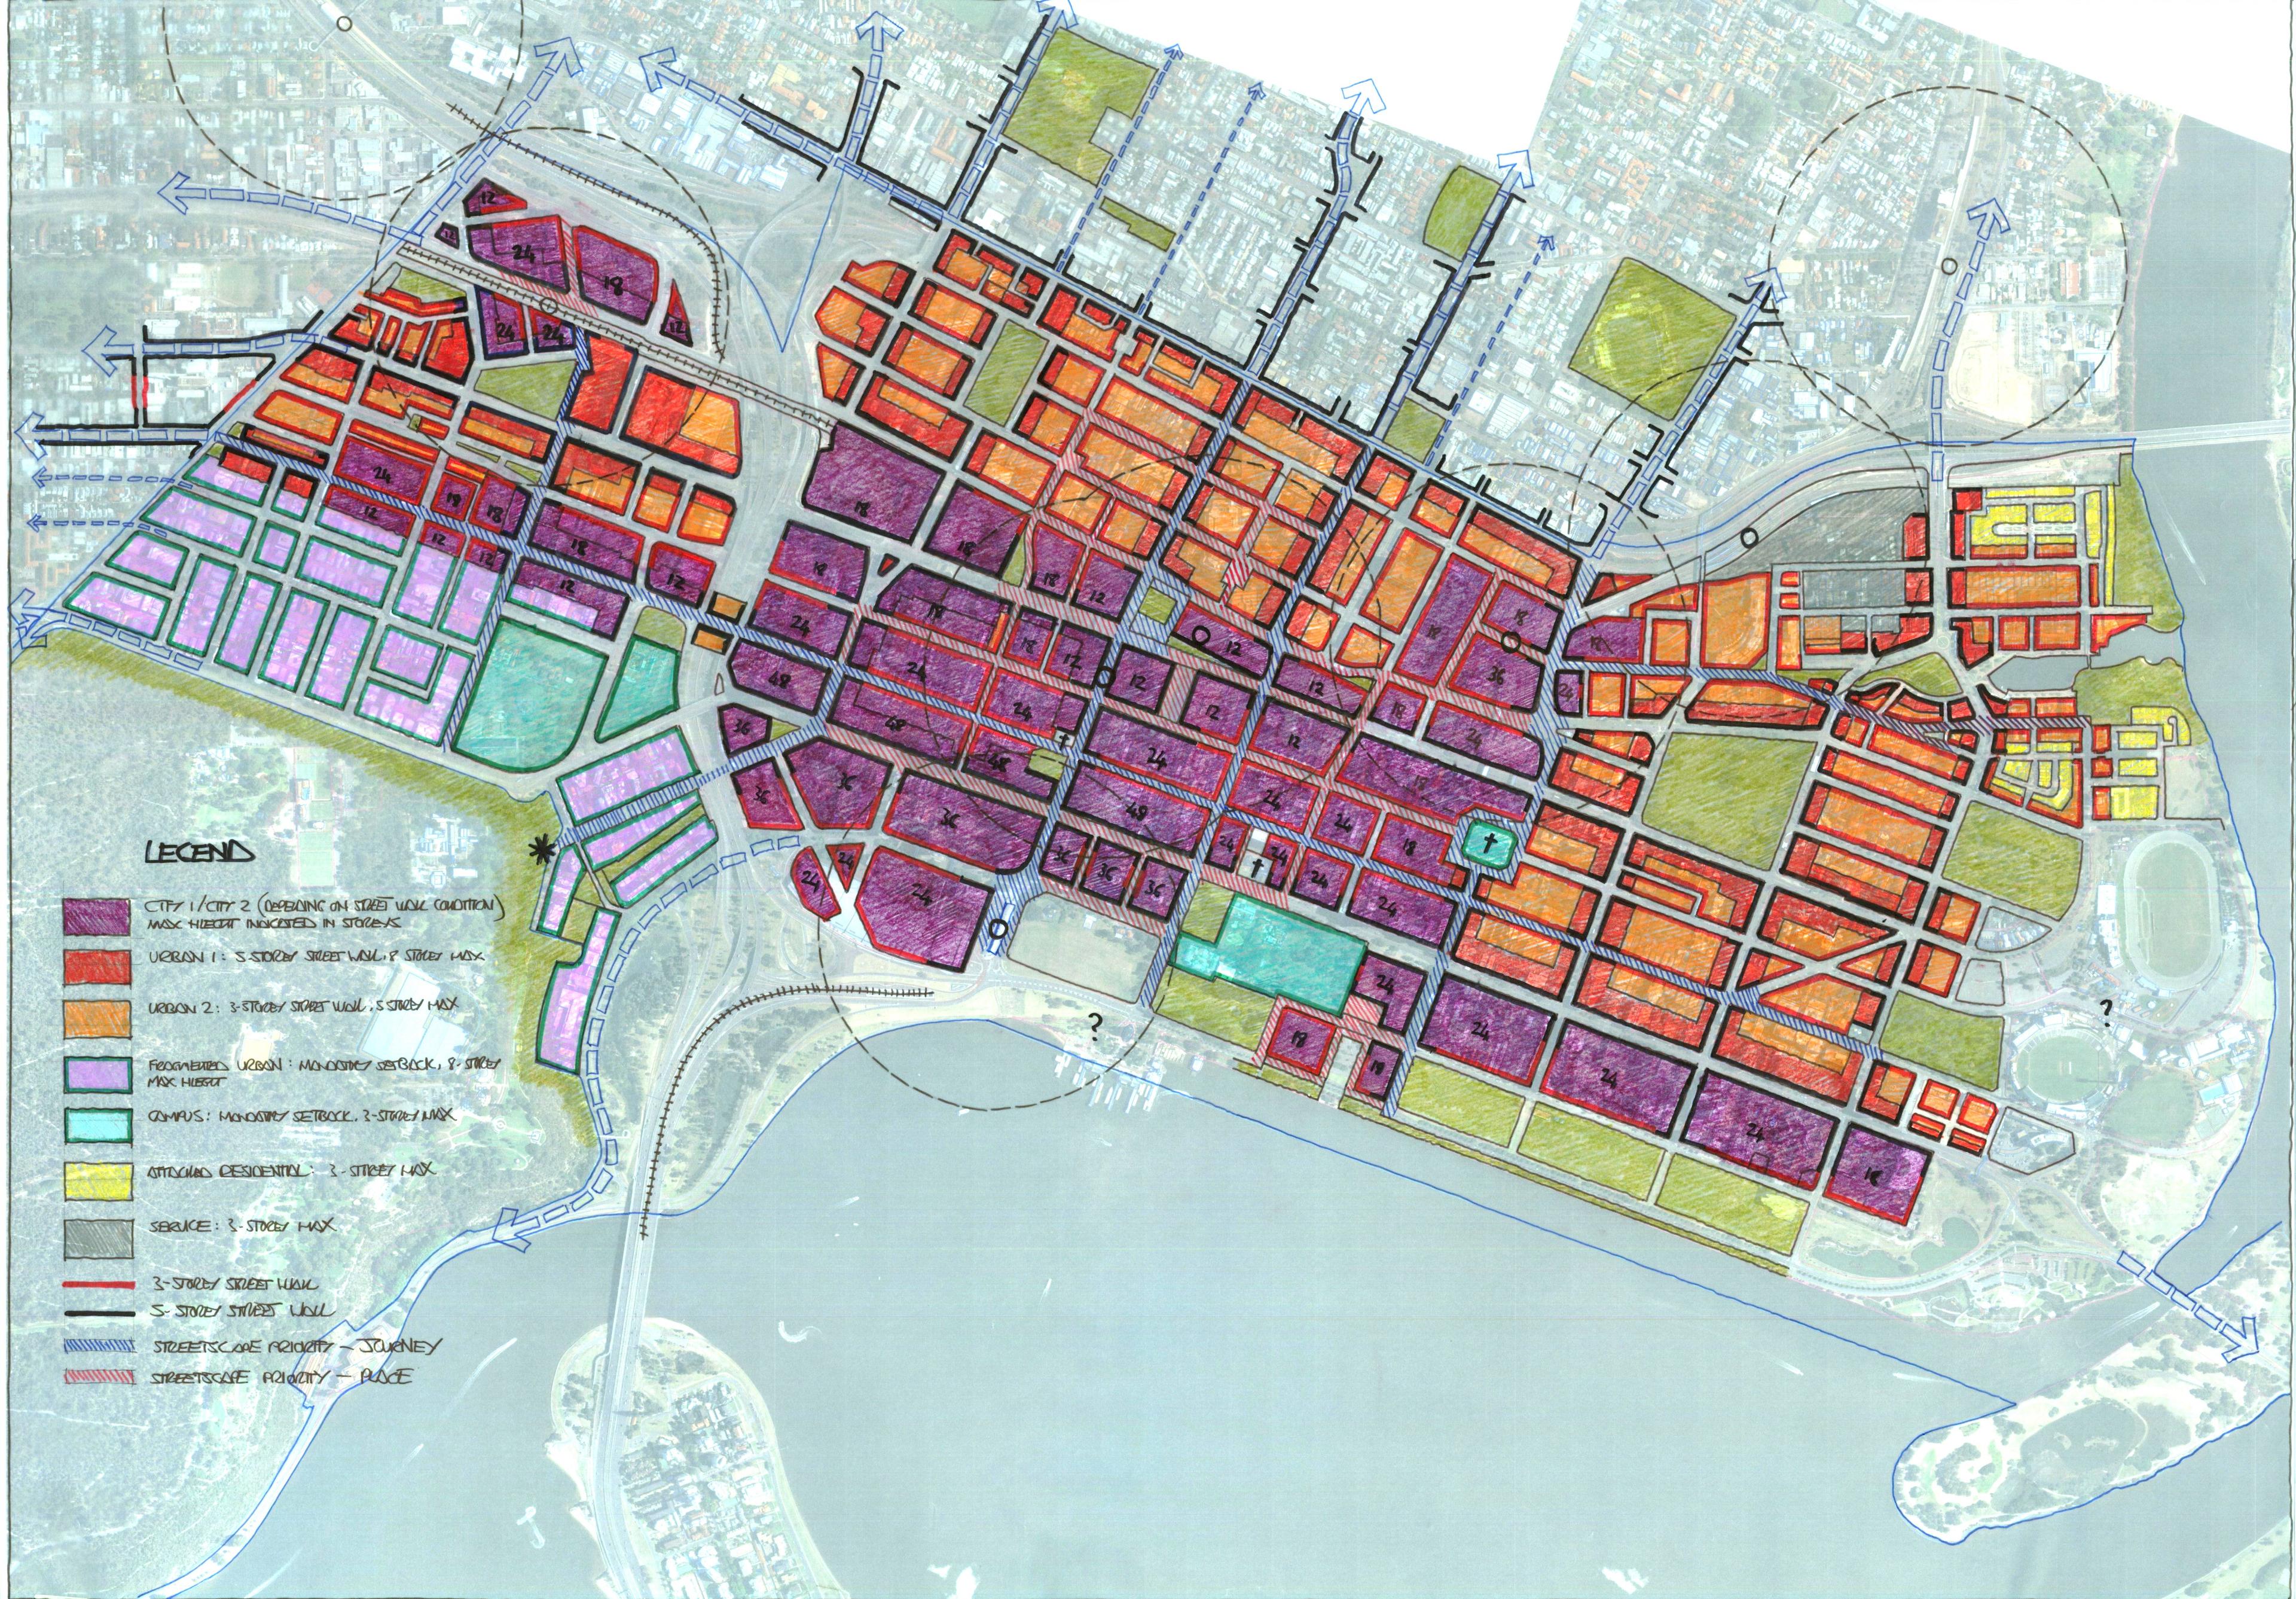 Perth CBD Urban design framework